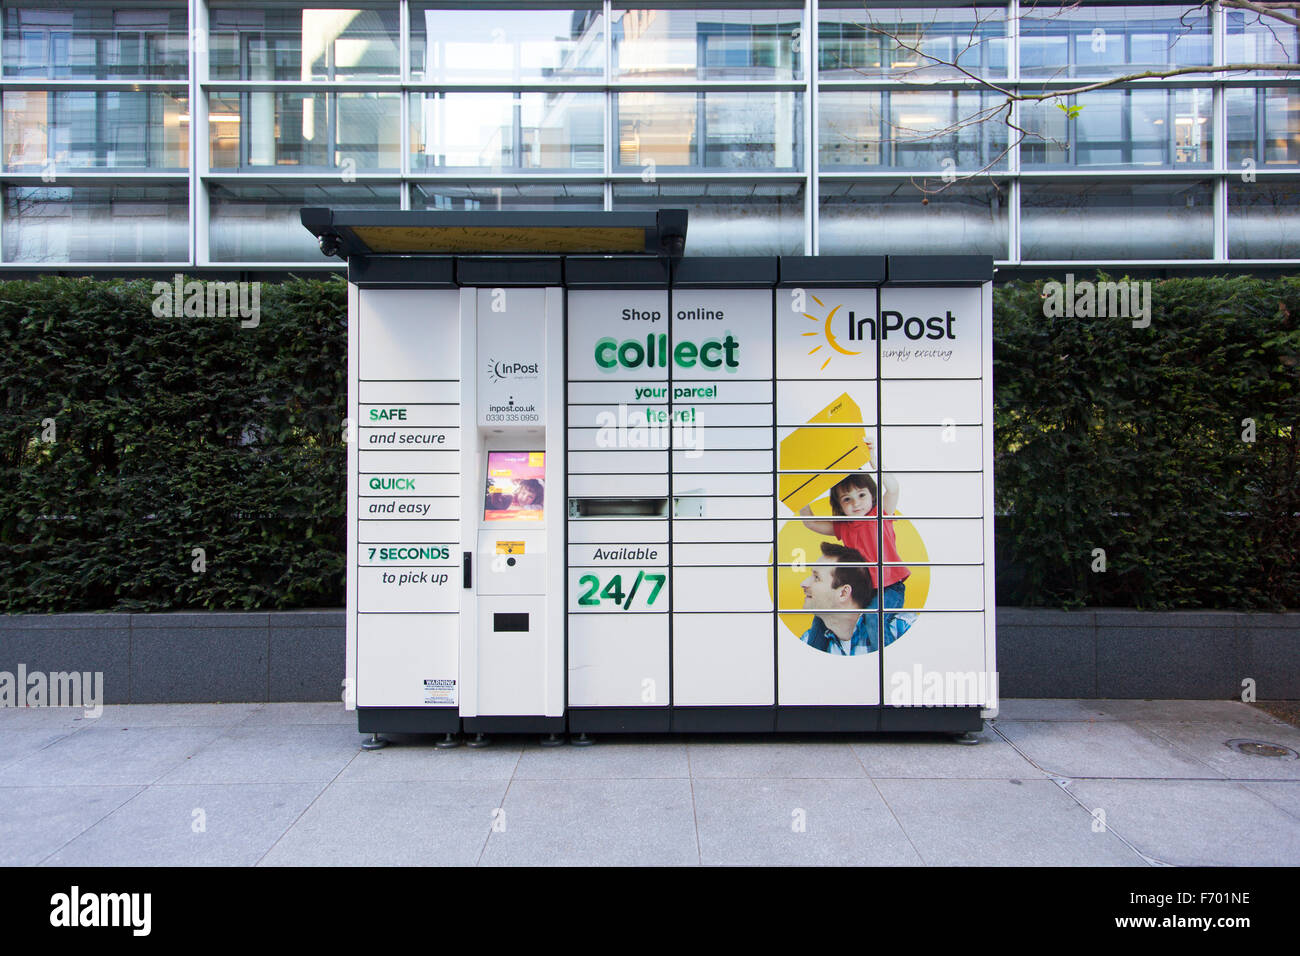 InPost Parcel collection kiosk, London, UK Stock Photo